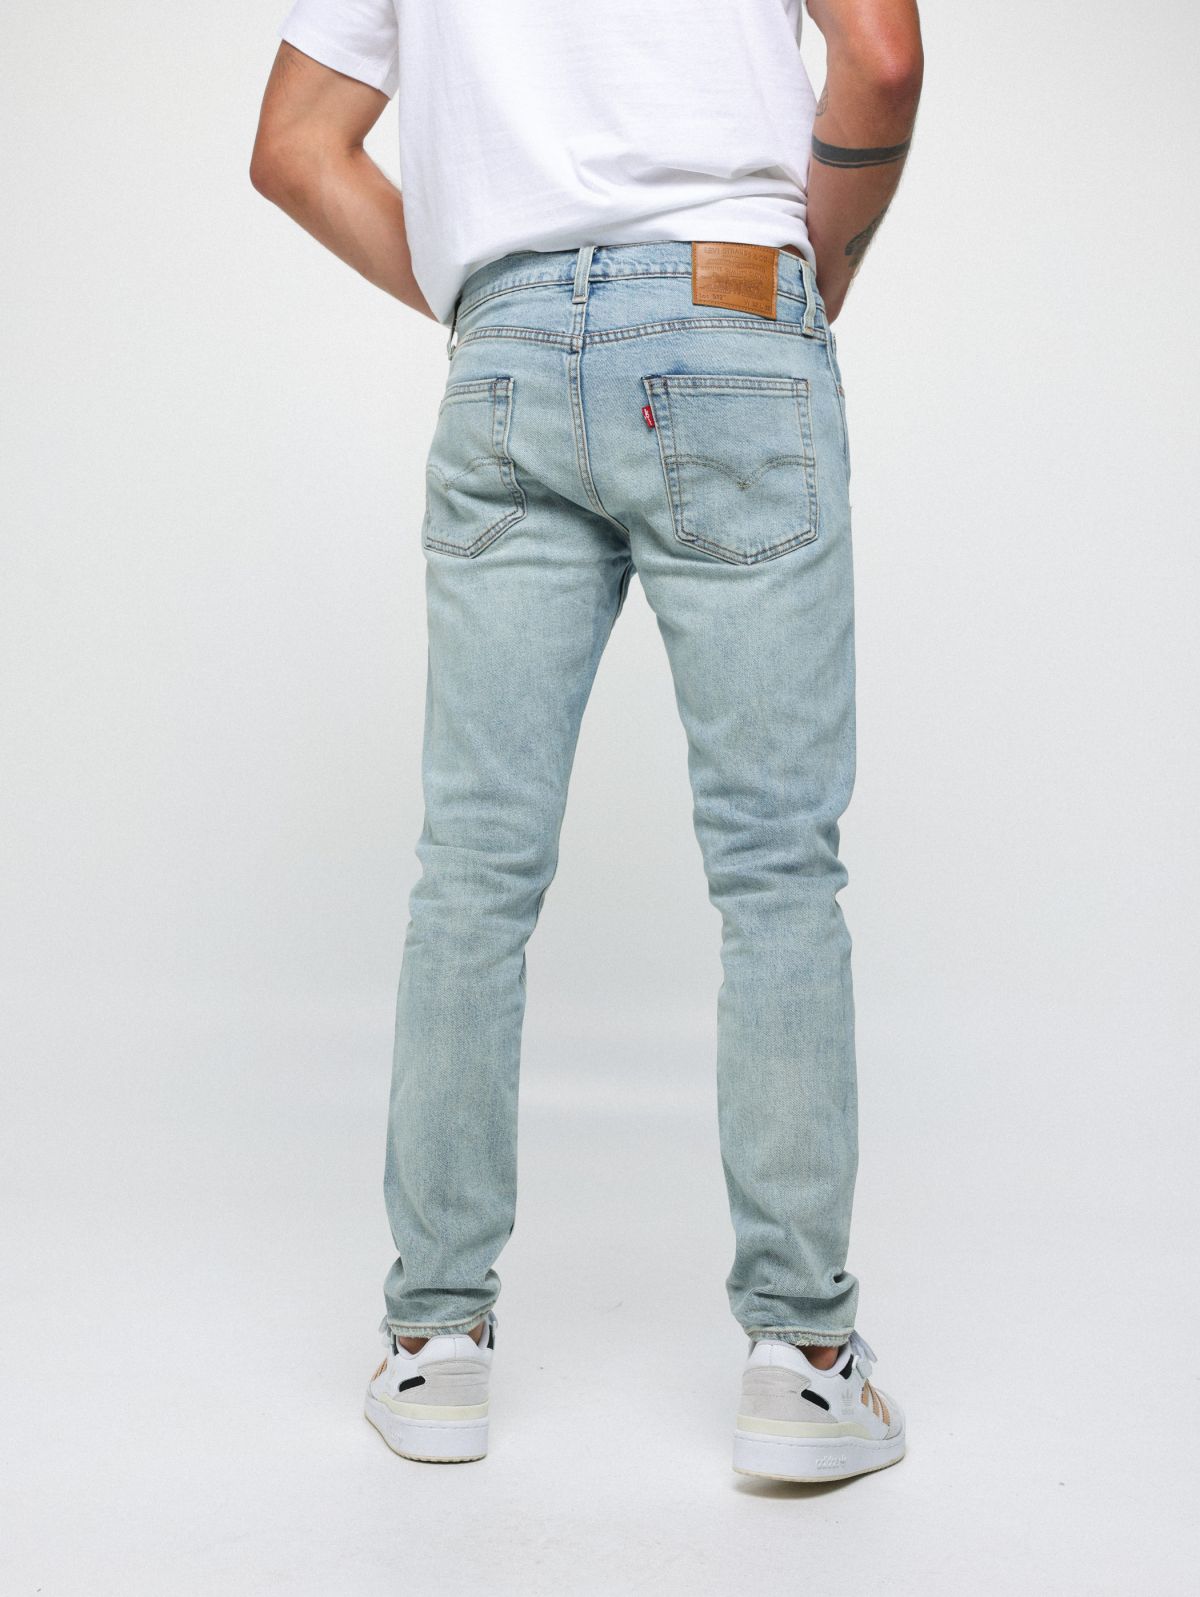  512 Slim Taper ג'ינס של LEVIS